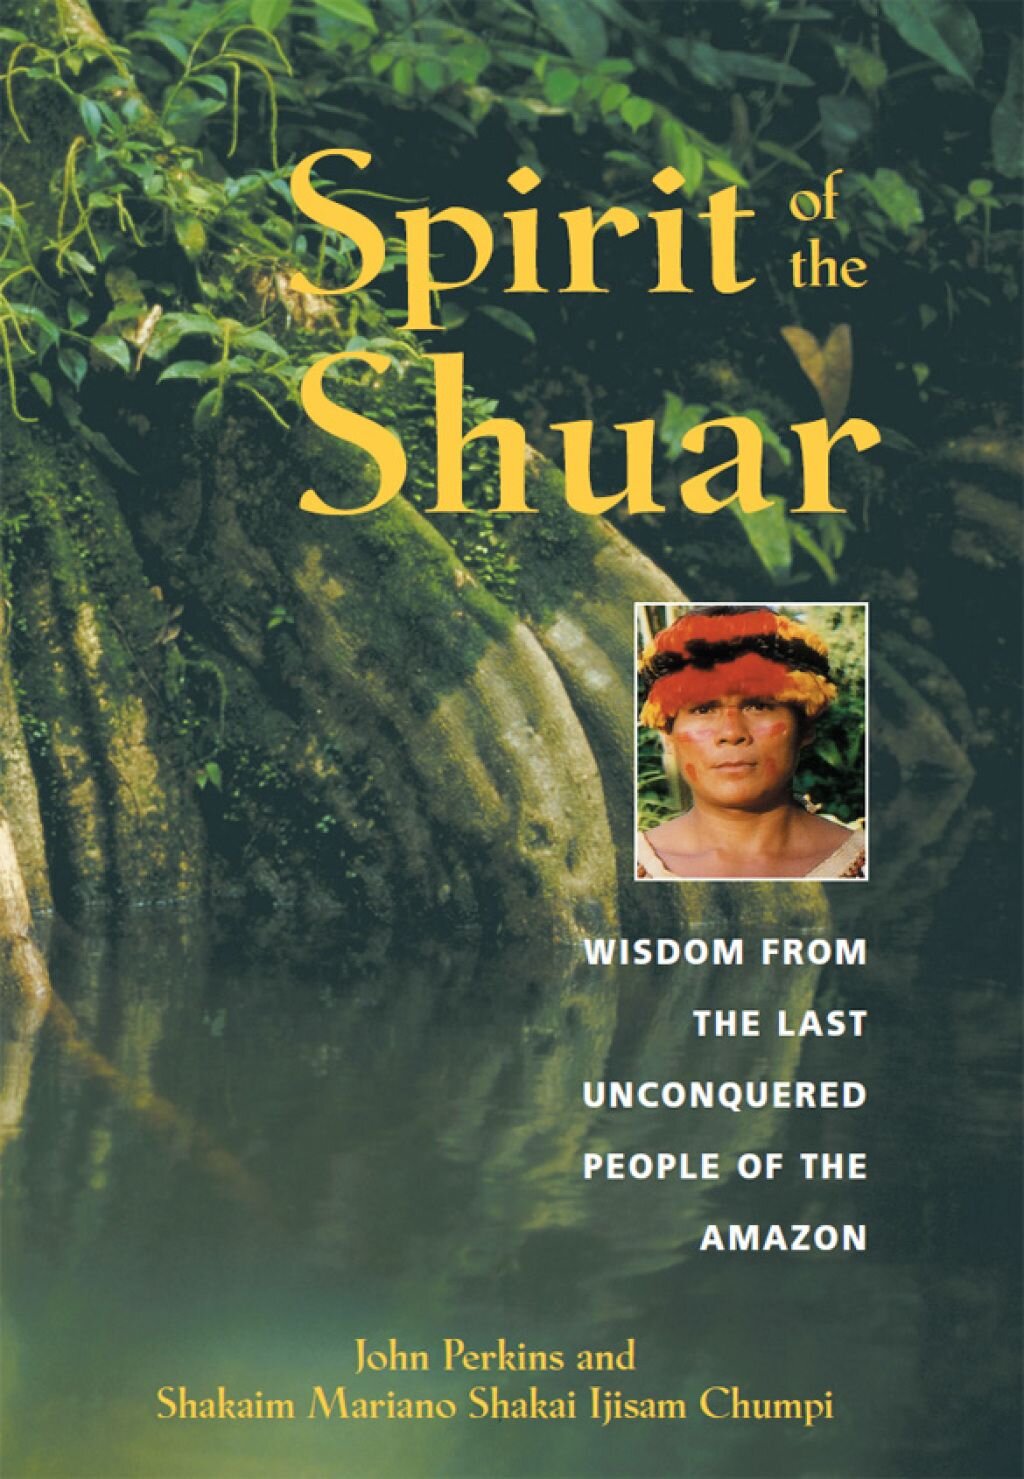 Spirit of the Shuar by John Perkins and Shakaim Mariano Shakai Ijisam Chumpi